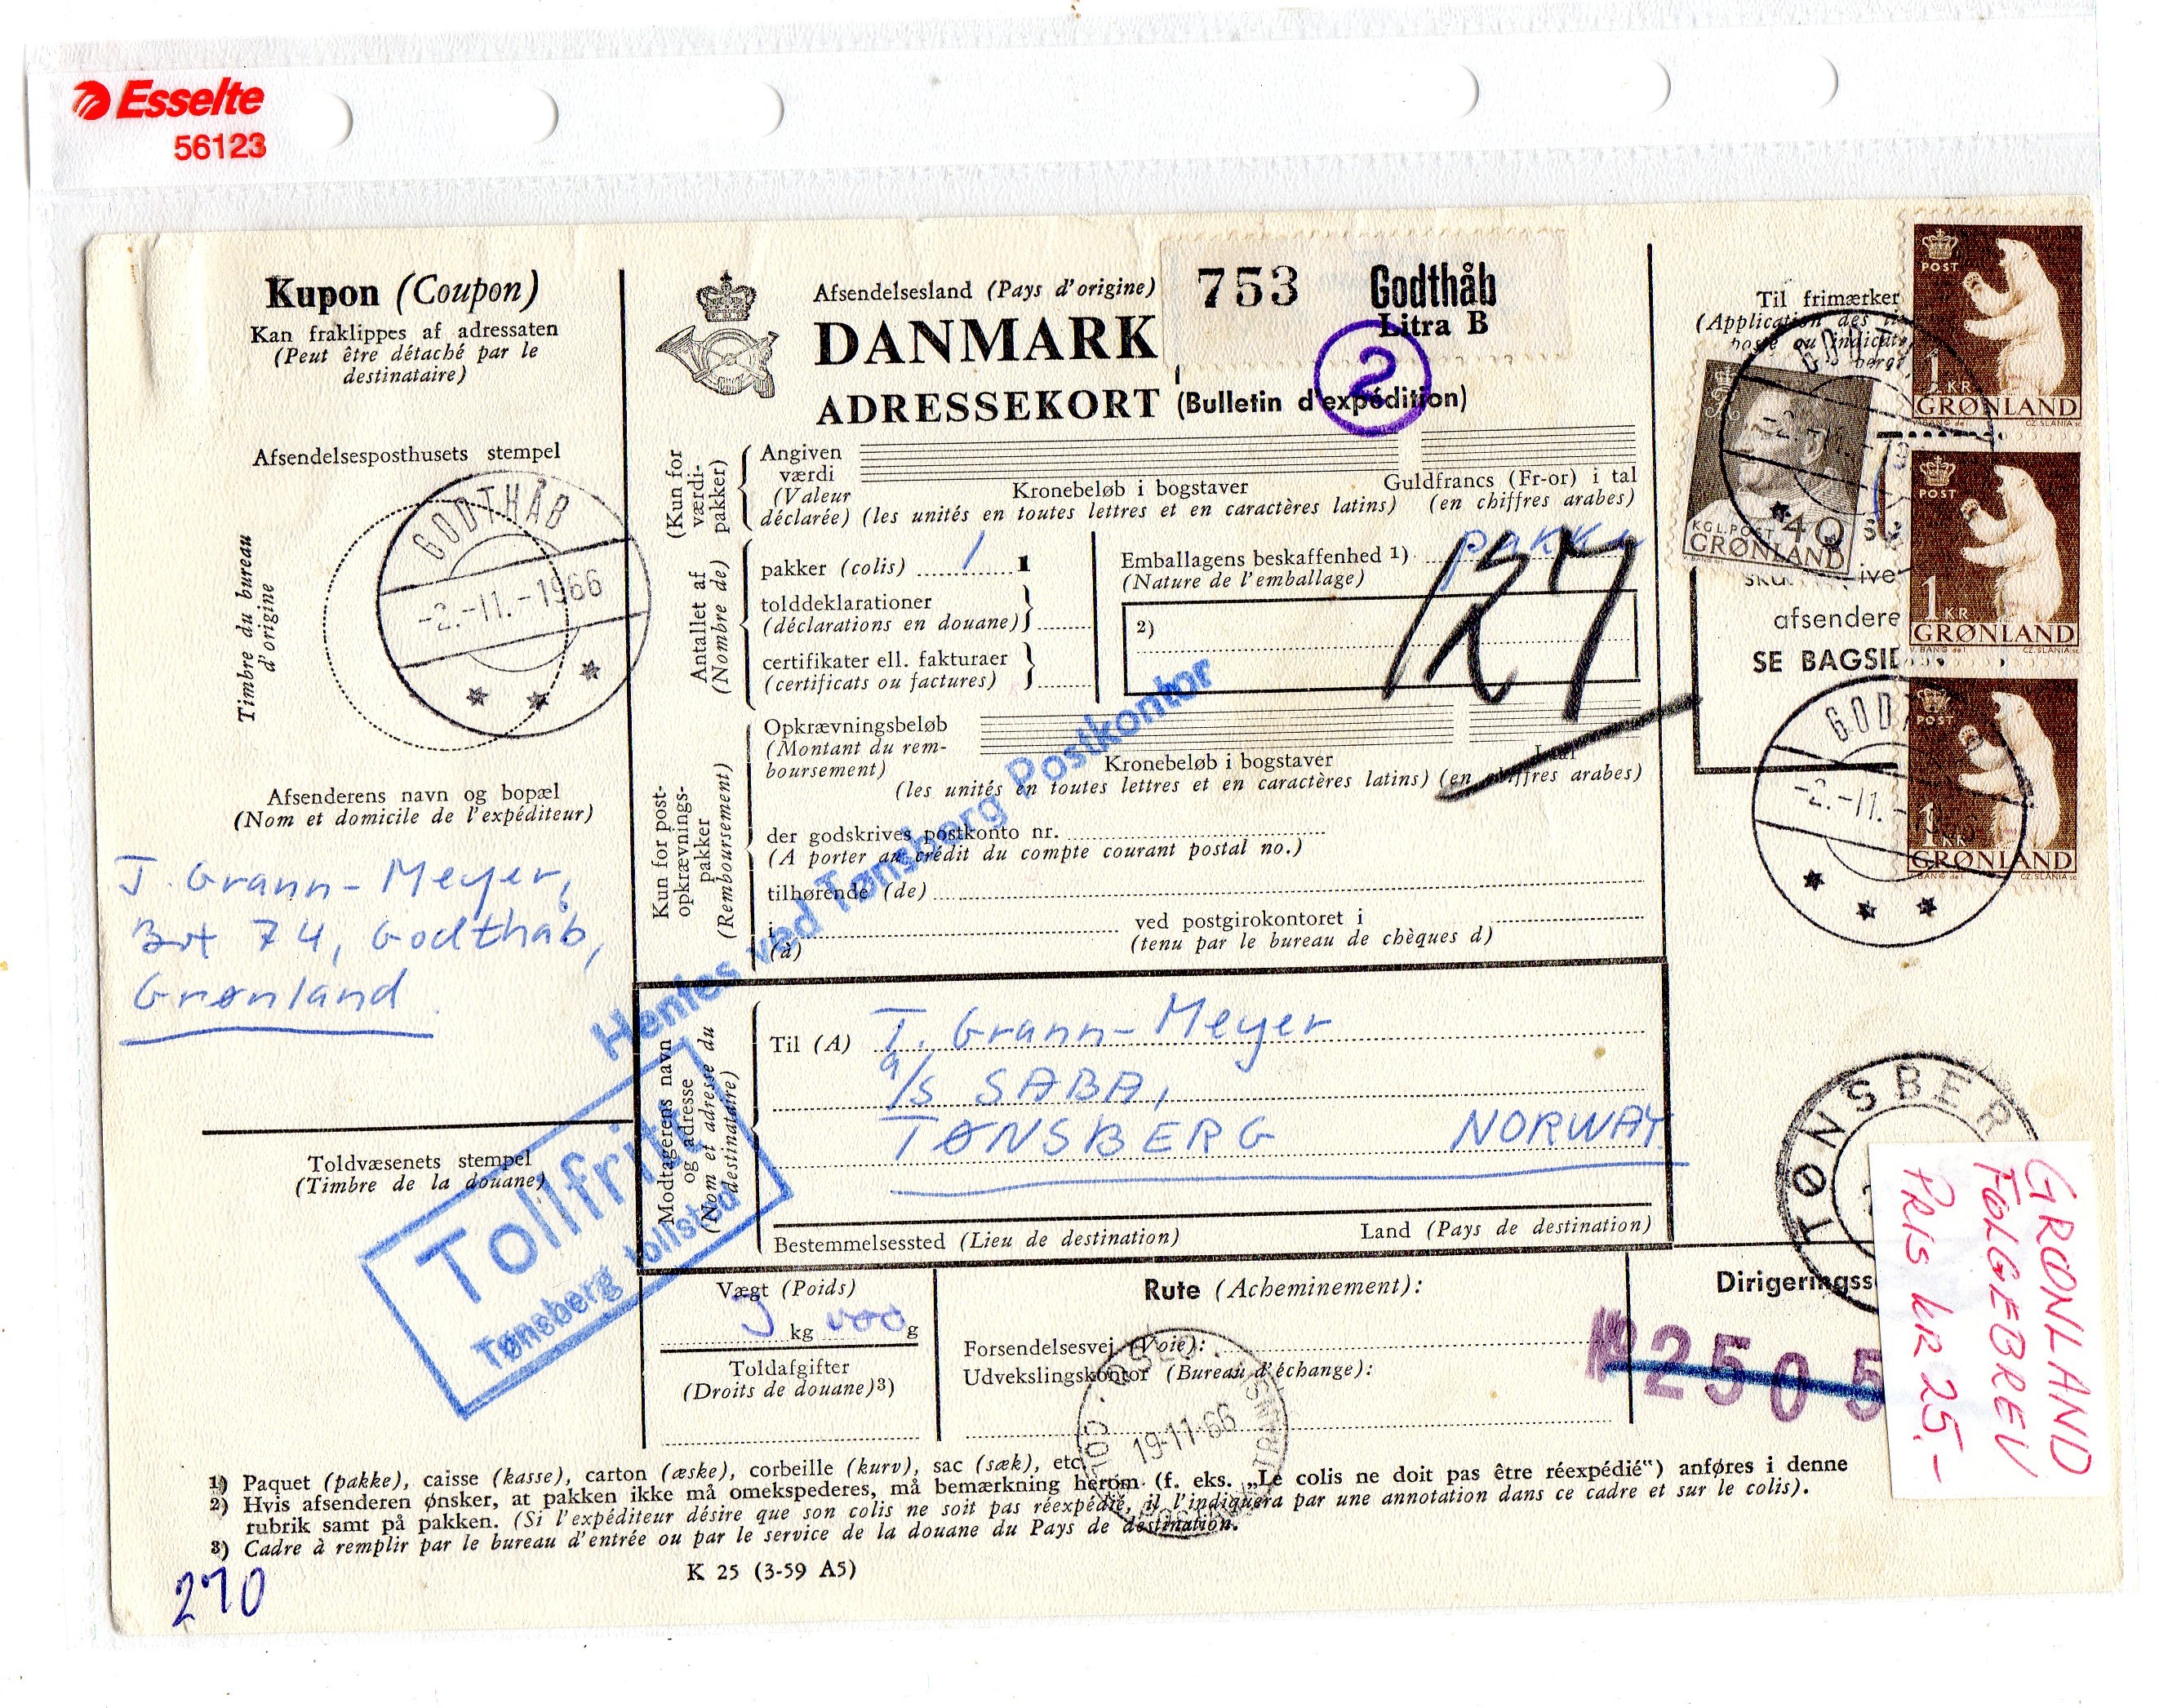 Danmark Adressekort  st Godthåb  1966